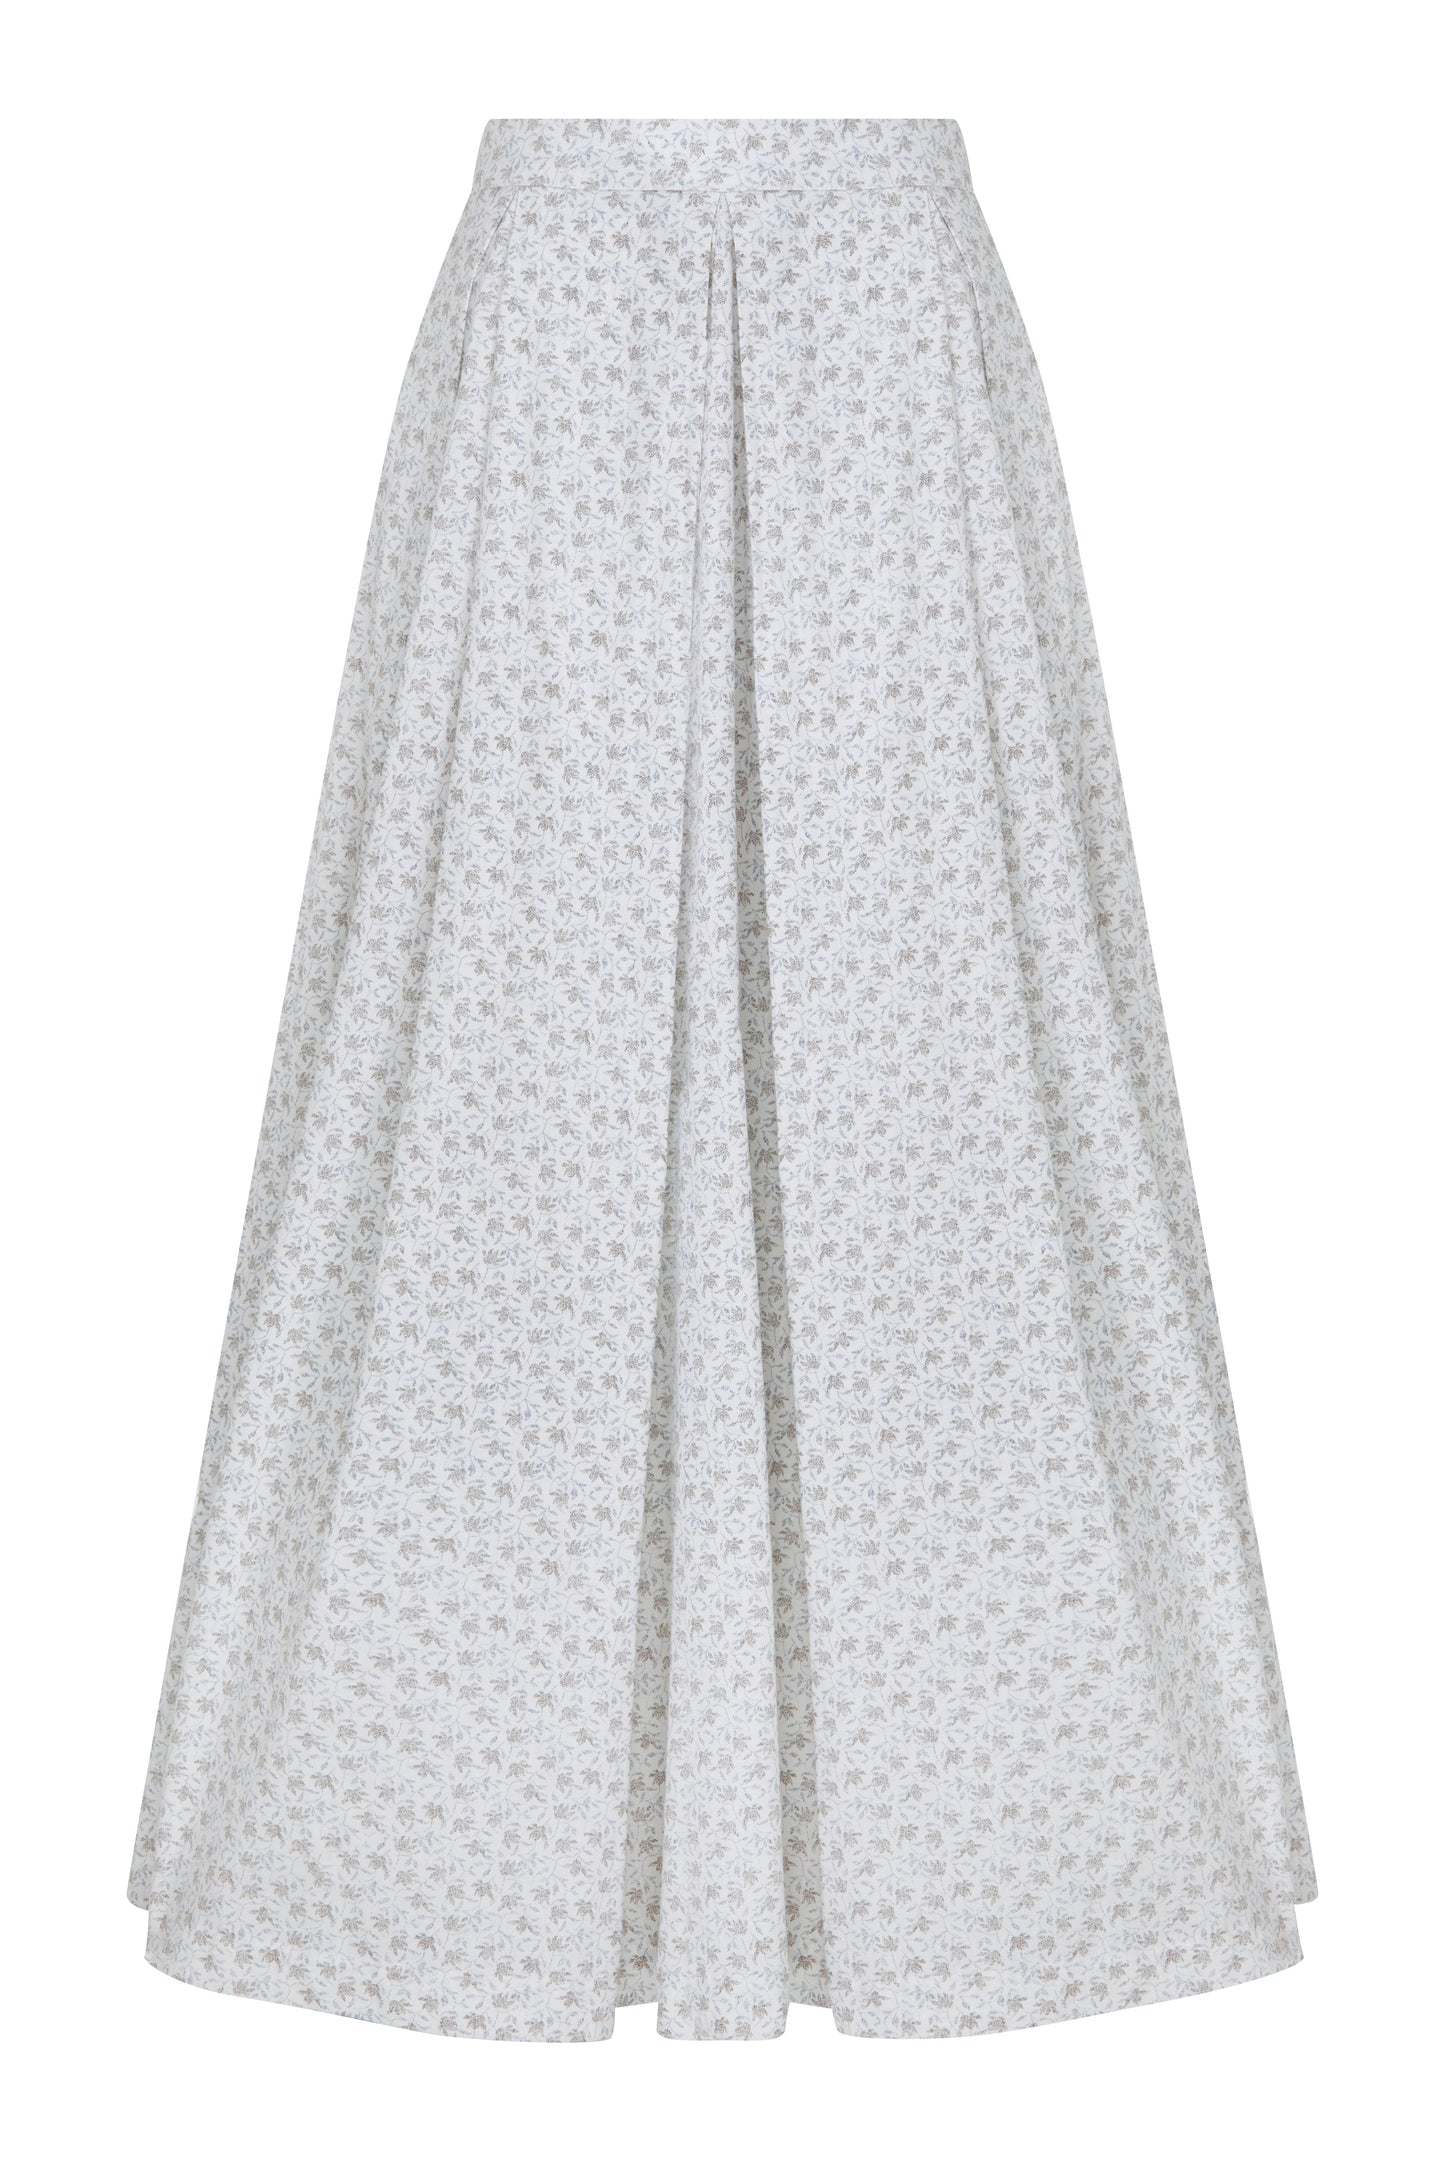 June Printed Cotton Midi Skirt in Cannoli Cream